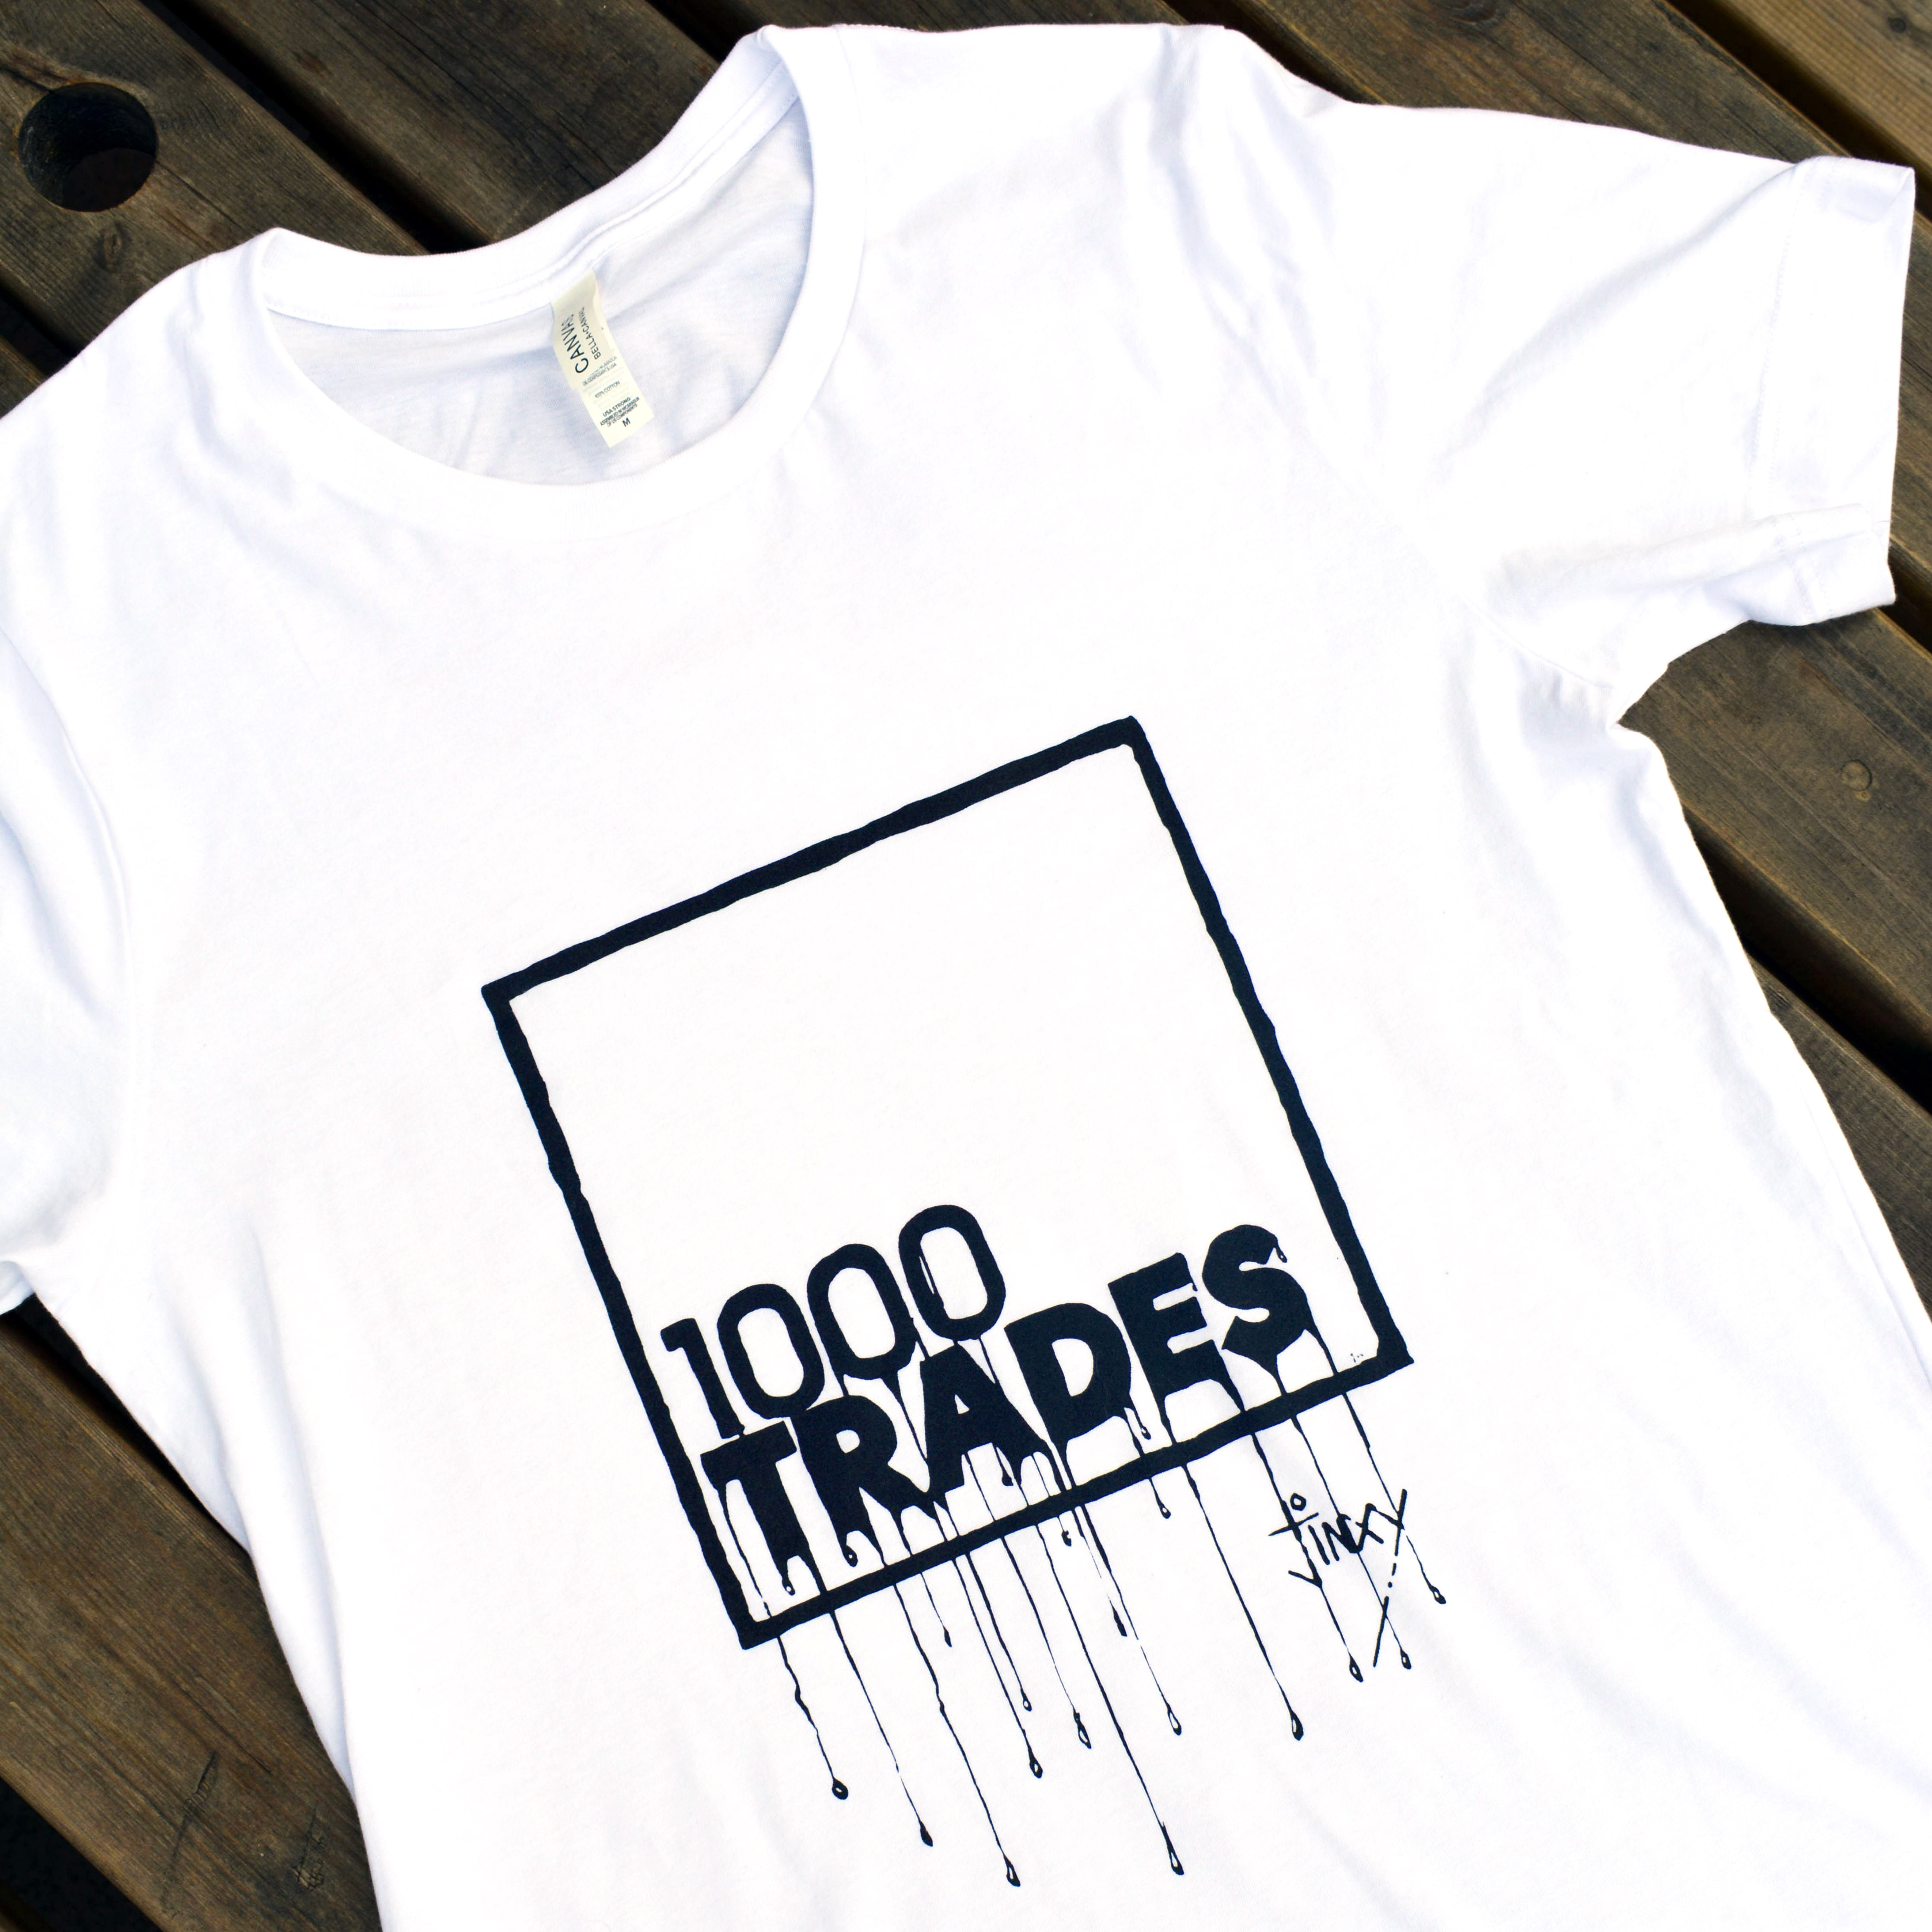 1000 Trades T-Shirt